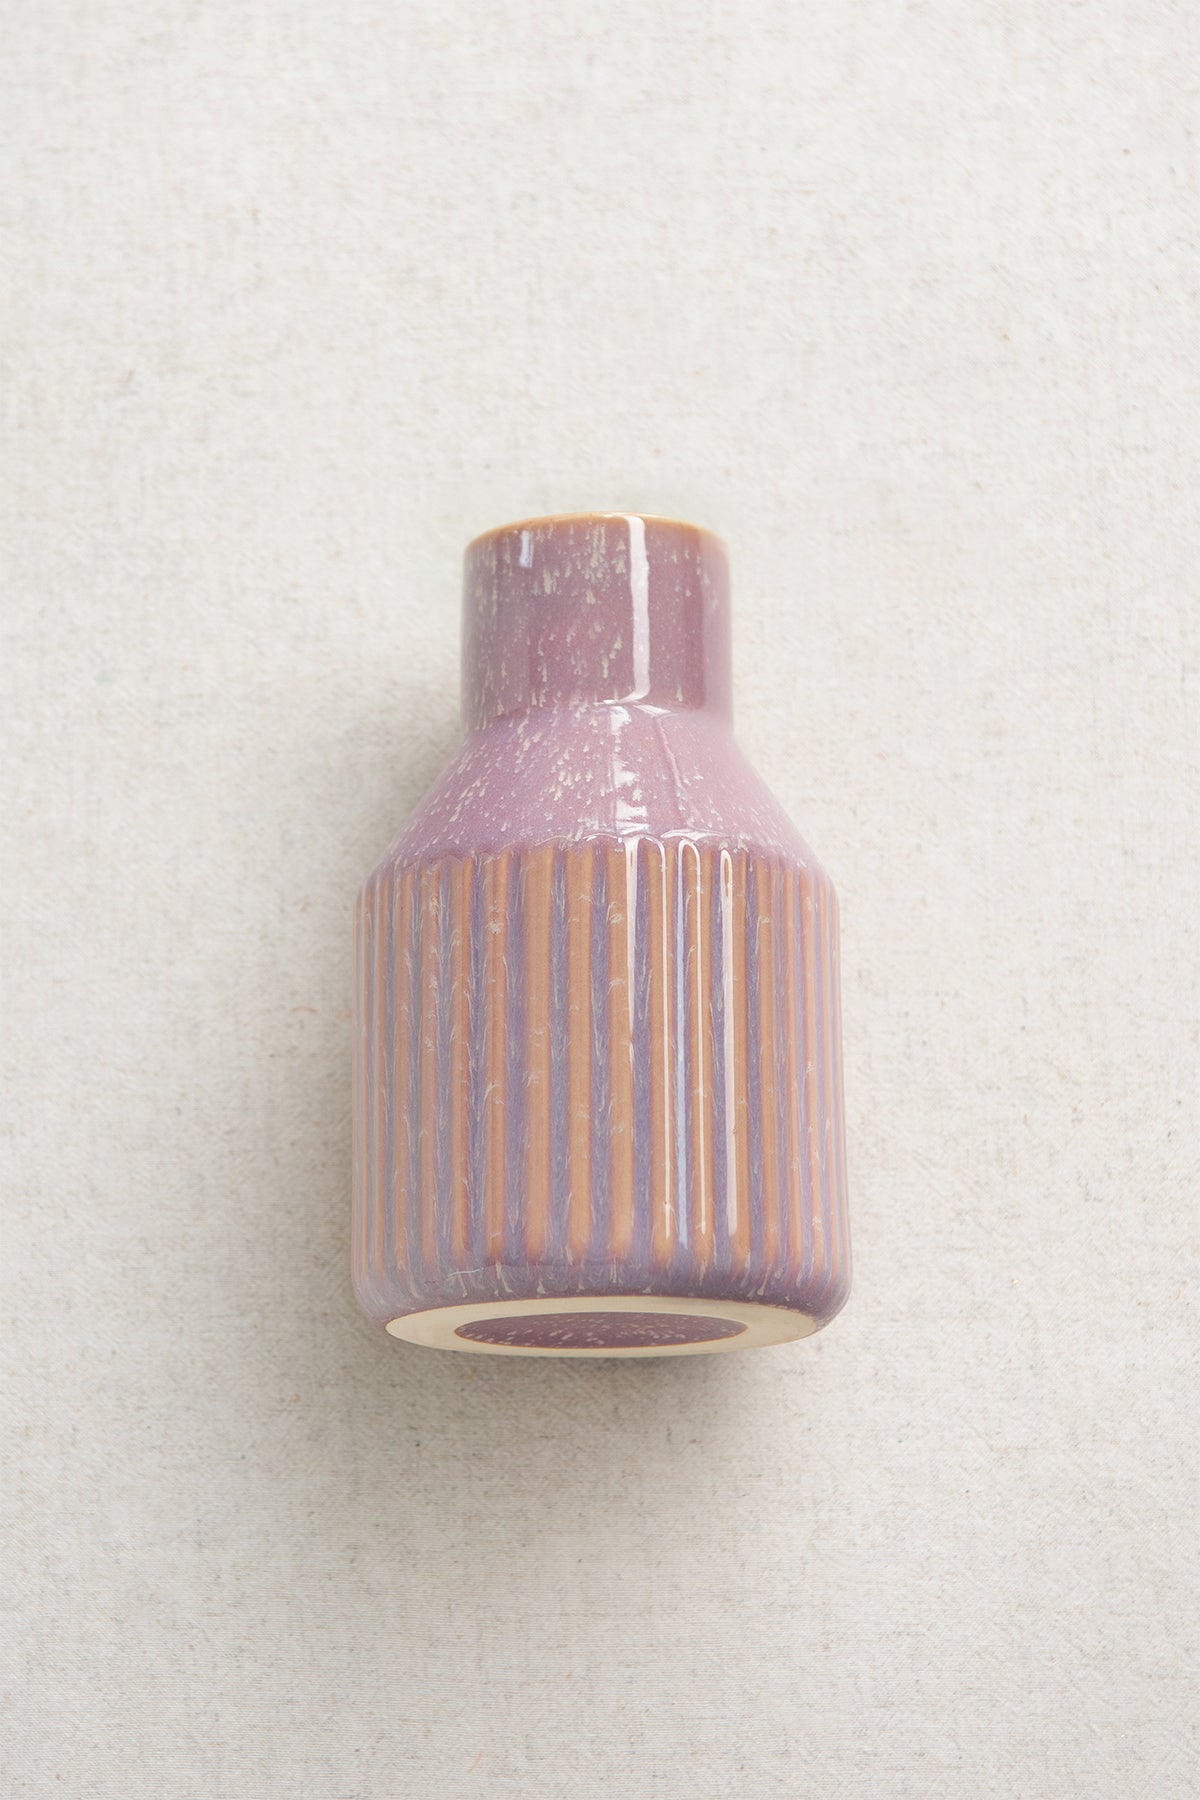 Roman Pattern Ceramic Vase in Twilight Purple